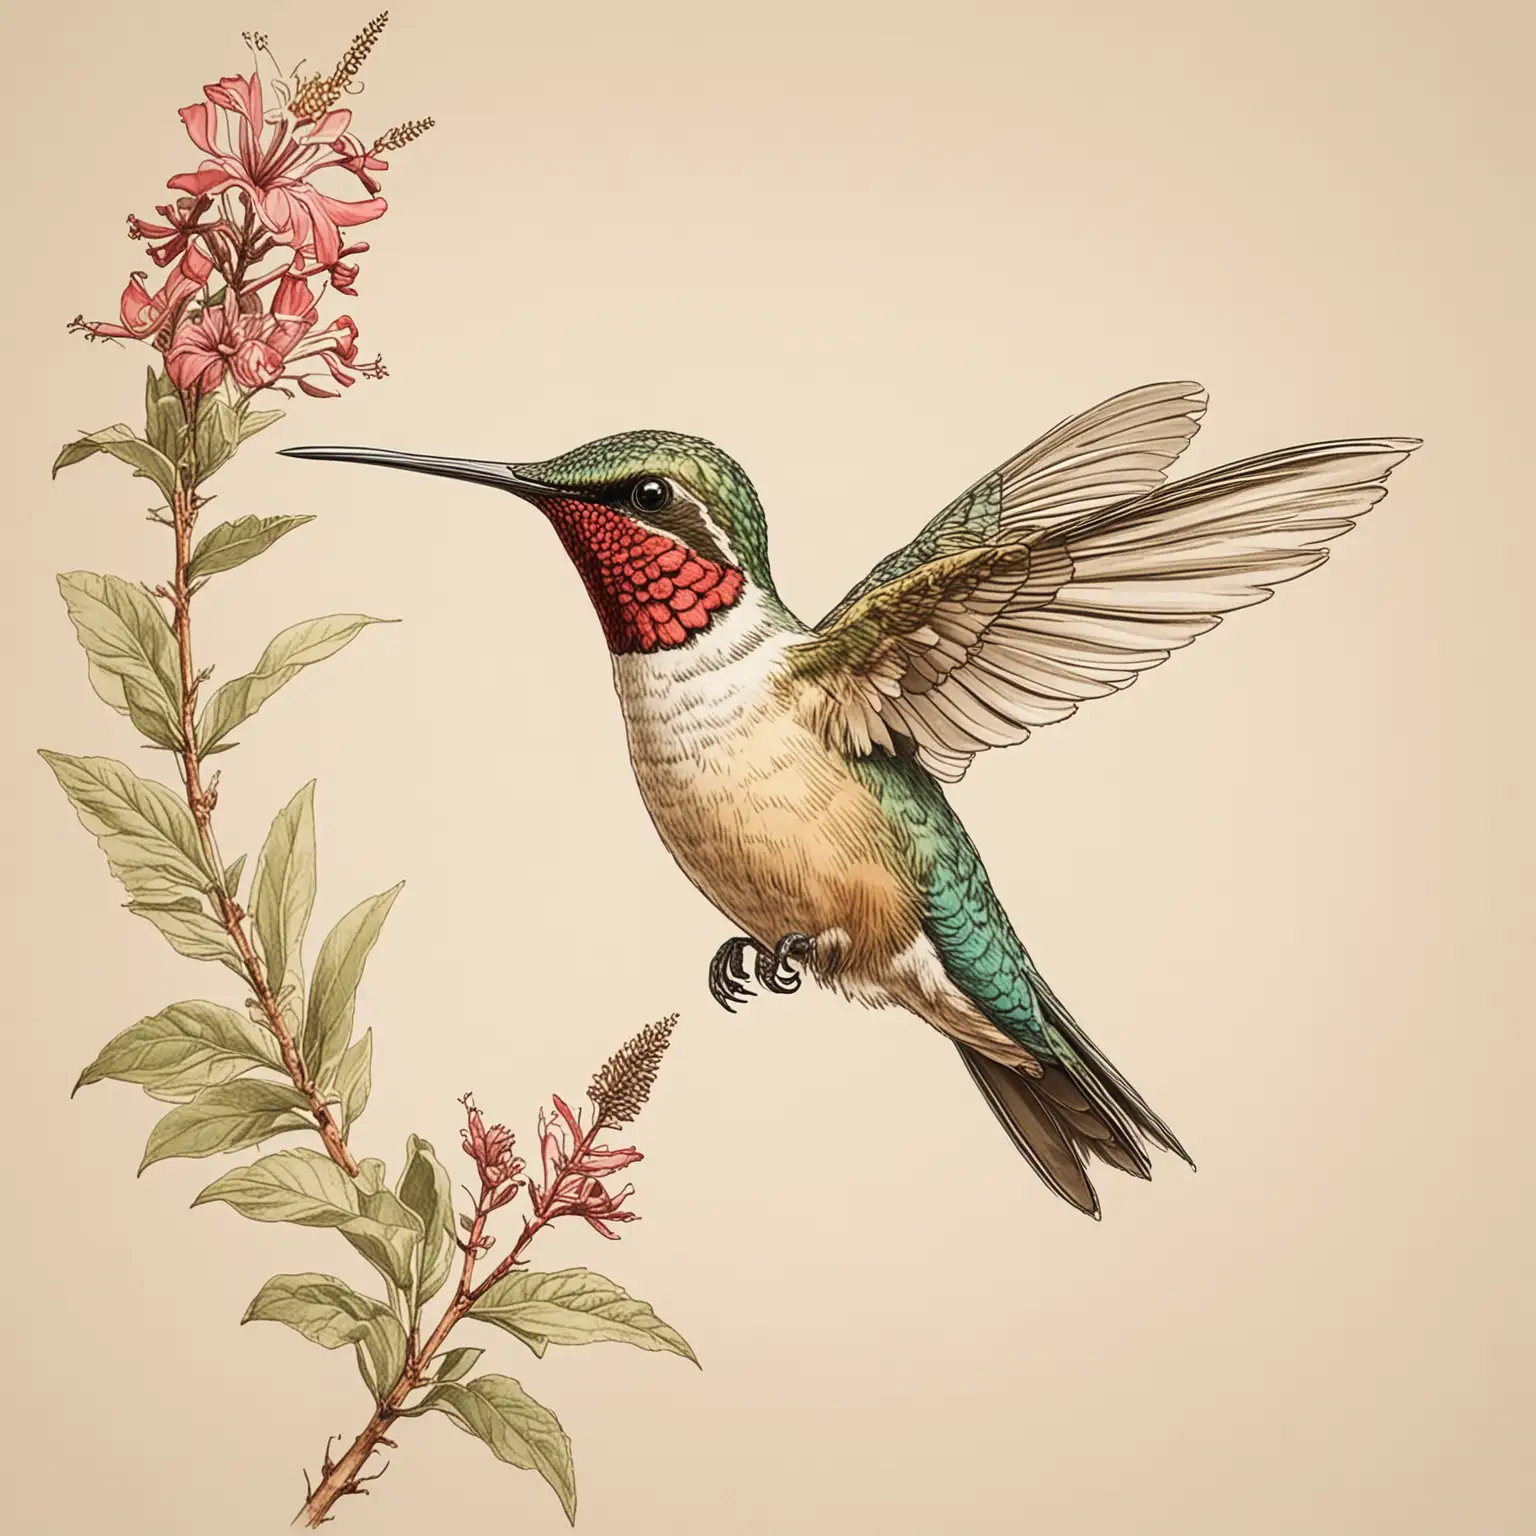 Northeastern US Hummingbird Drawing Audubon Style on Cream Background